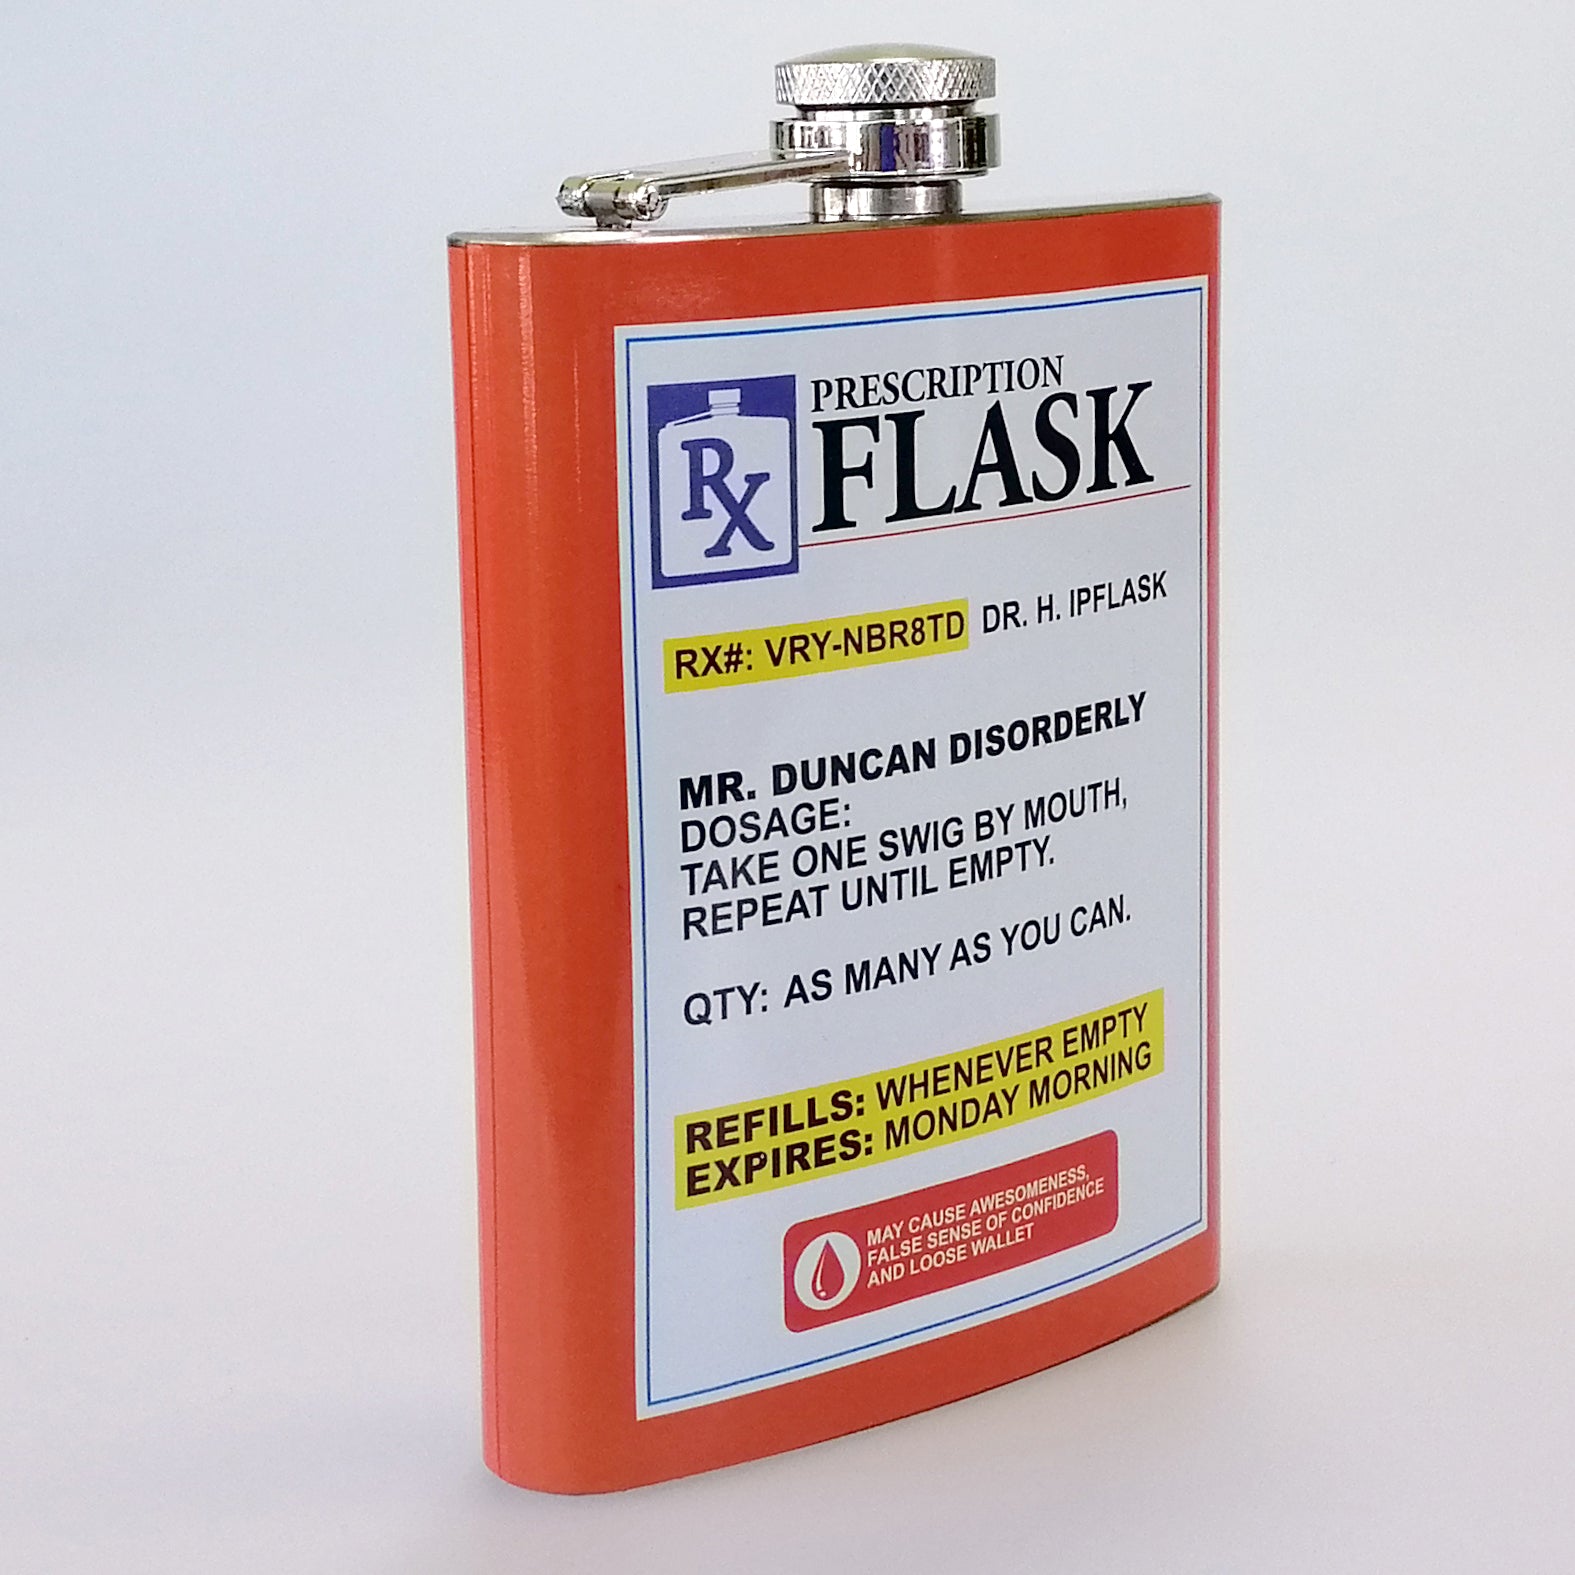 Stainless Steel 'Prescription' Flask - 235ml